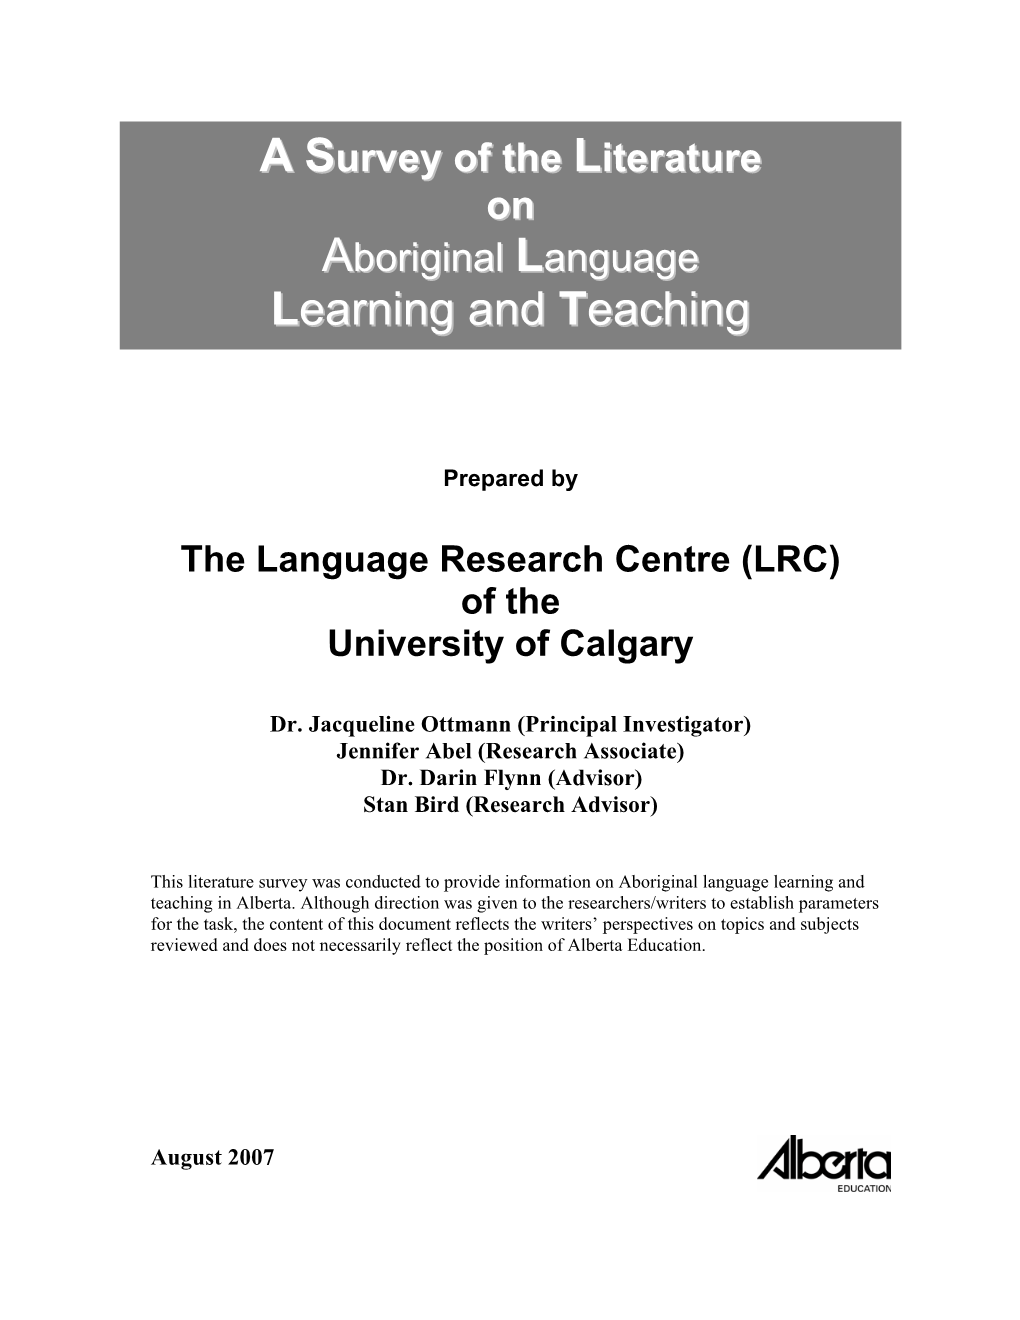 Aboriginal Language Learning and Teaching in Alberta